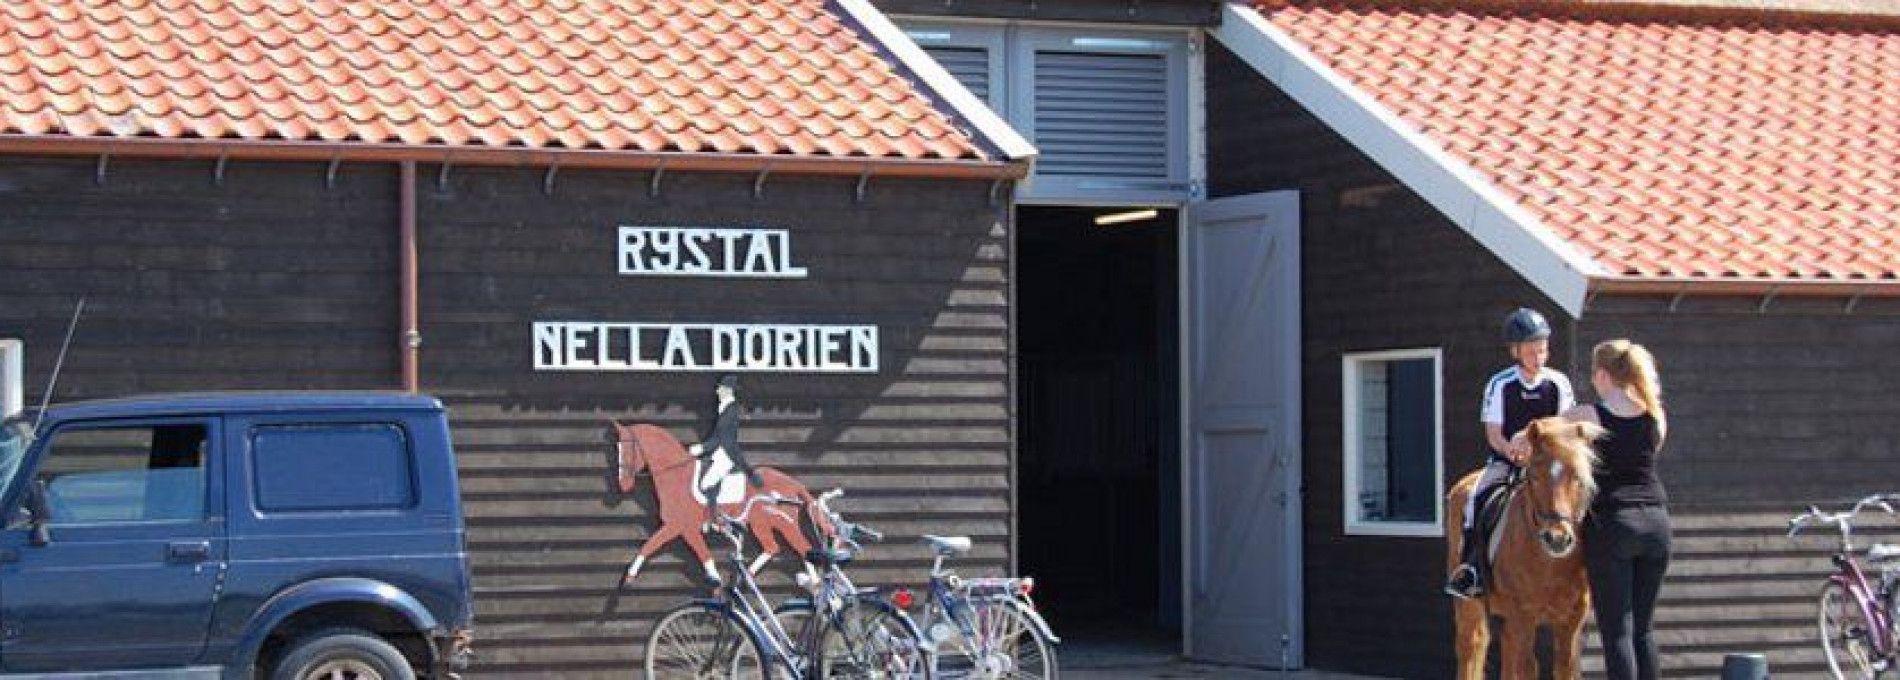 Riding stable Nella Dorien - Tourist Information 